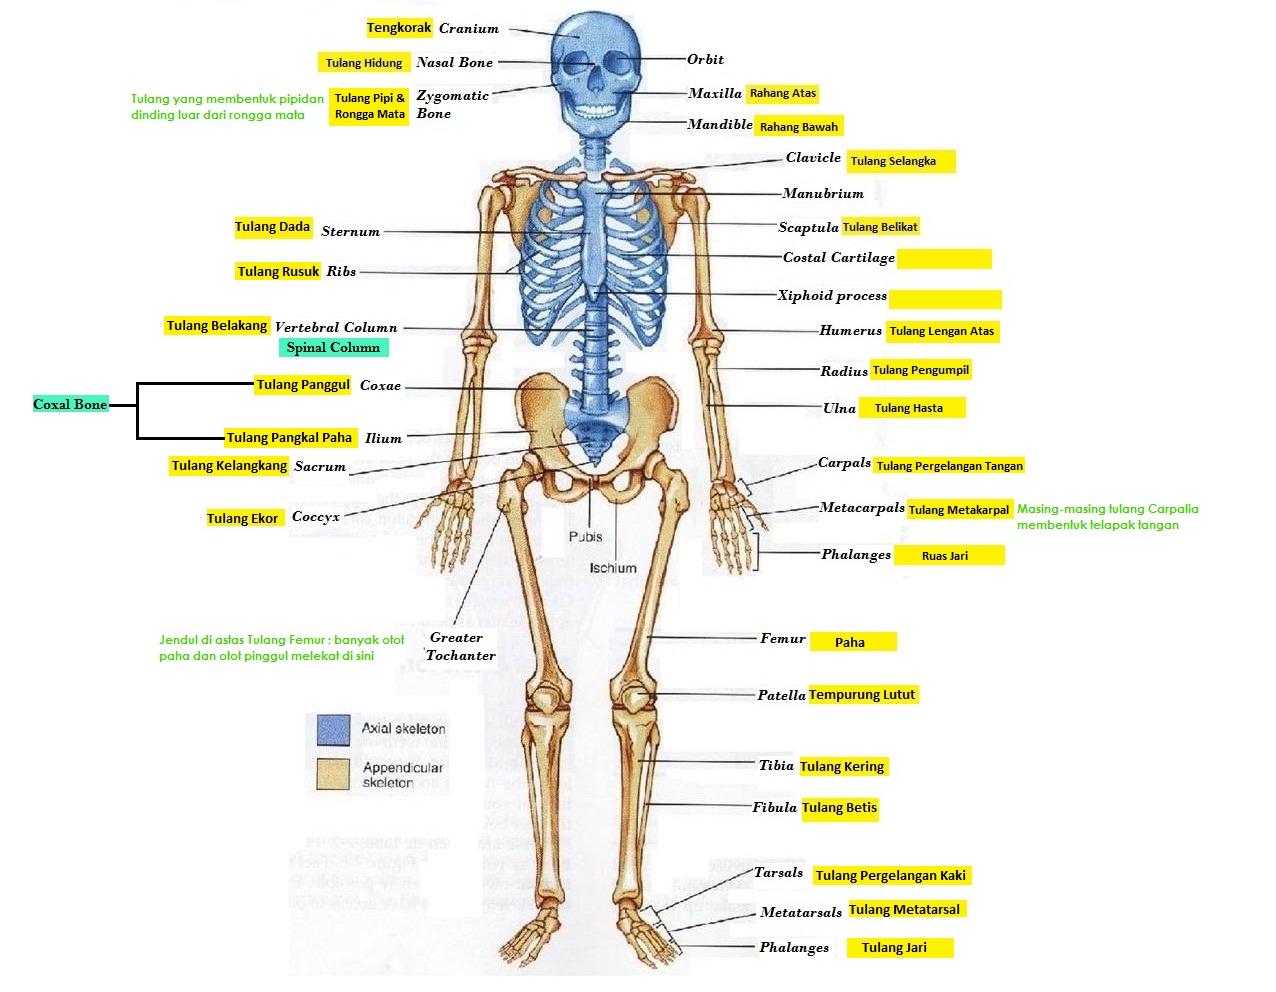 10 Fakta Tentang Tulang  Manusia  BLOGCASK